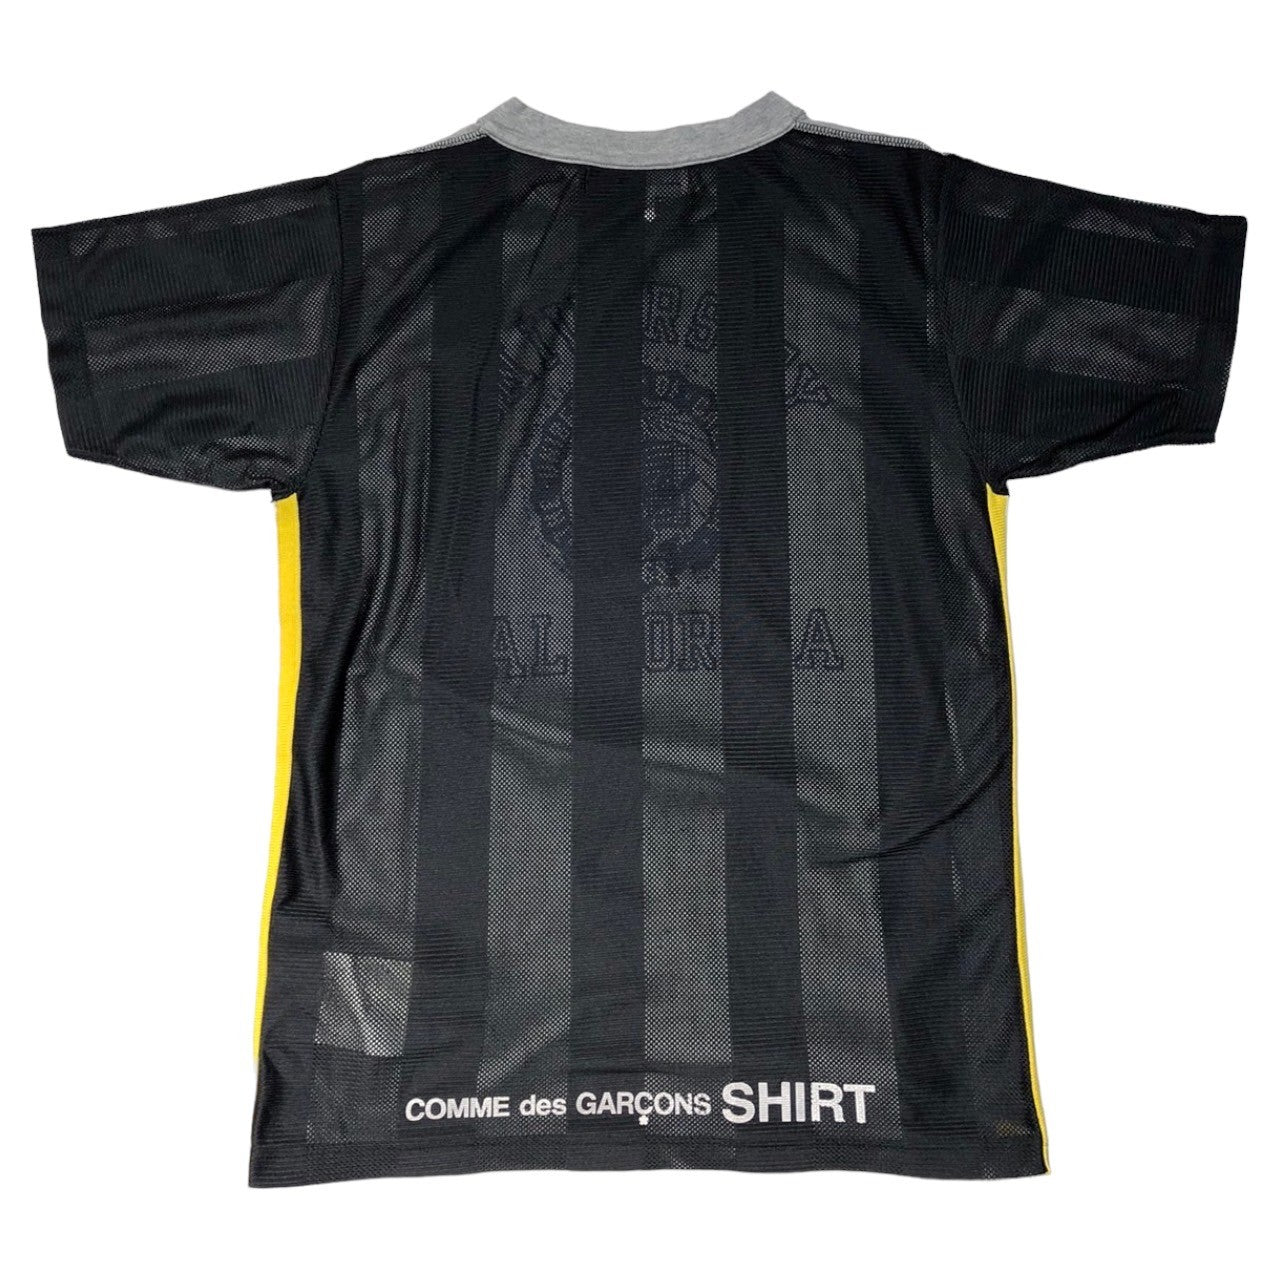 COMME des GARCONS SHIRT(コムデギャルソンシャツ) reversible mesh college T-shirt リバーシブル メッシュ カレッジ ロゴ Tシャツ W12802 M グレー×ブラック×イエロー